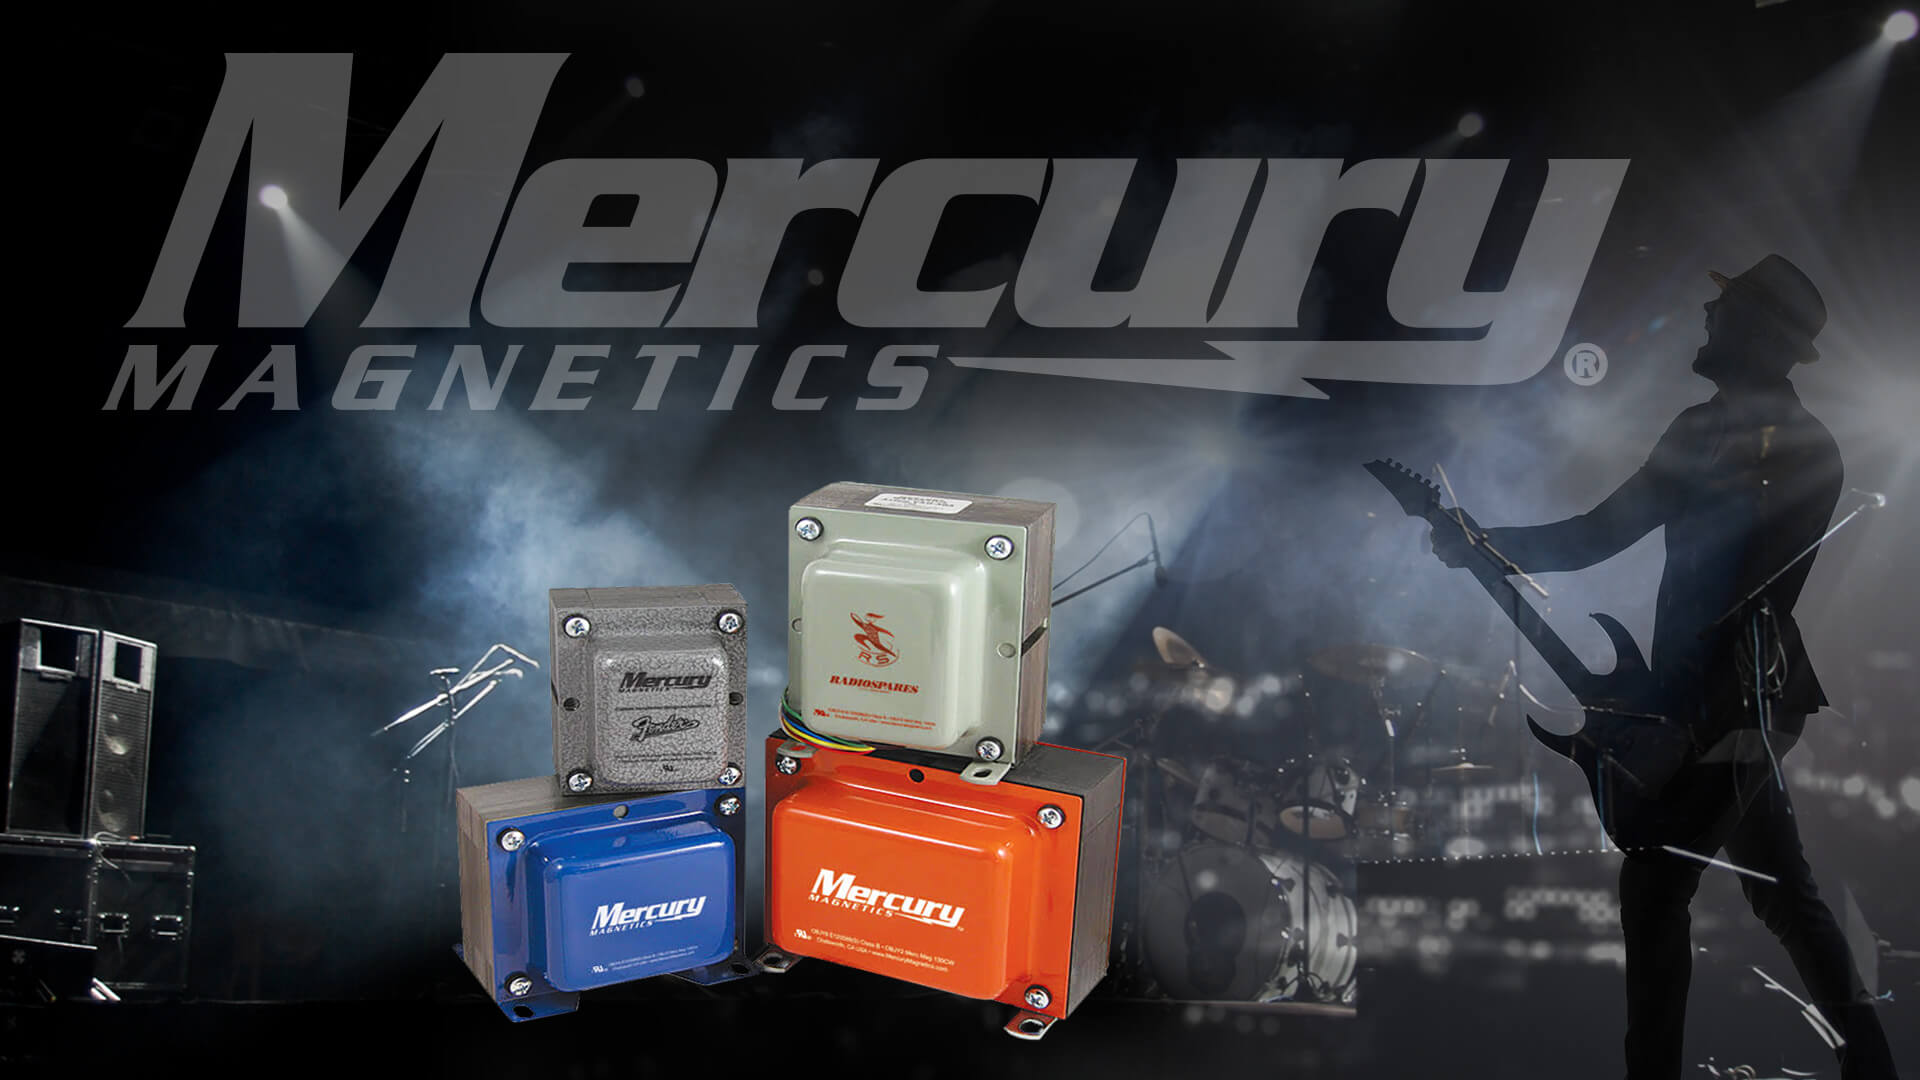 www.mercurymagnetics.com